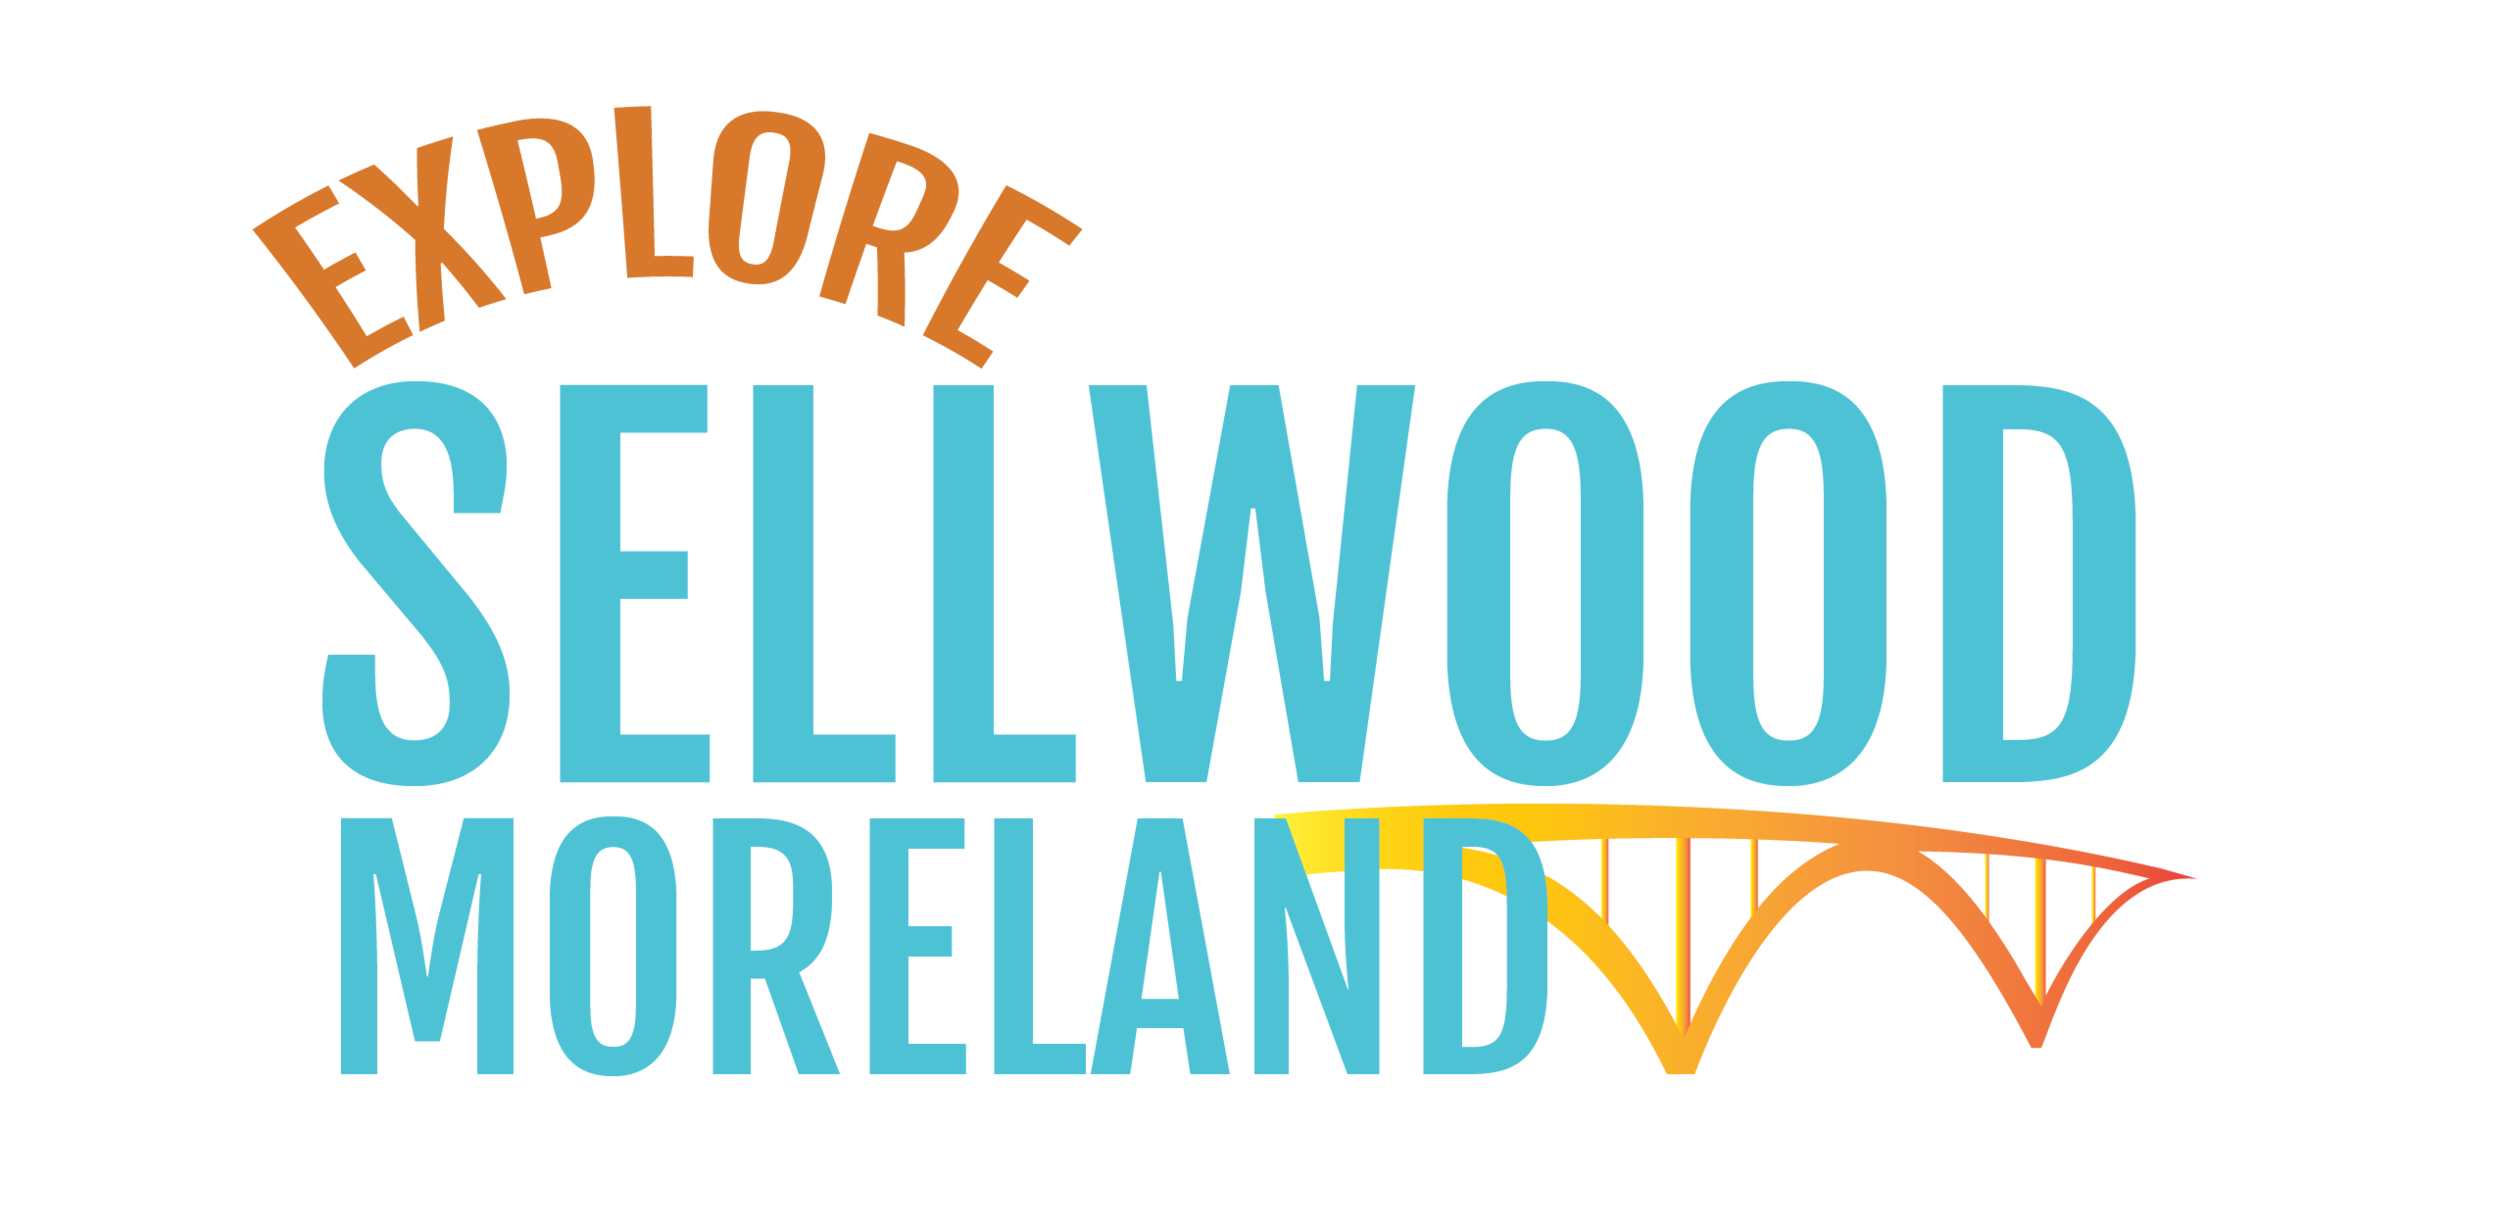 Explore Sellwood Moreland